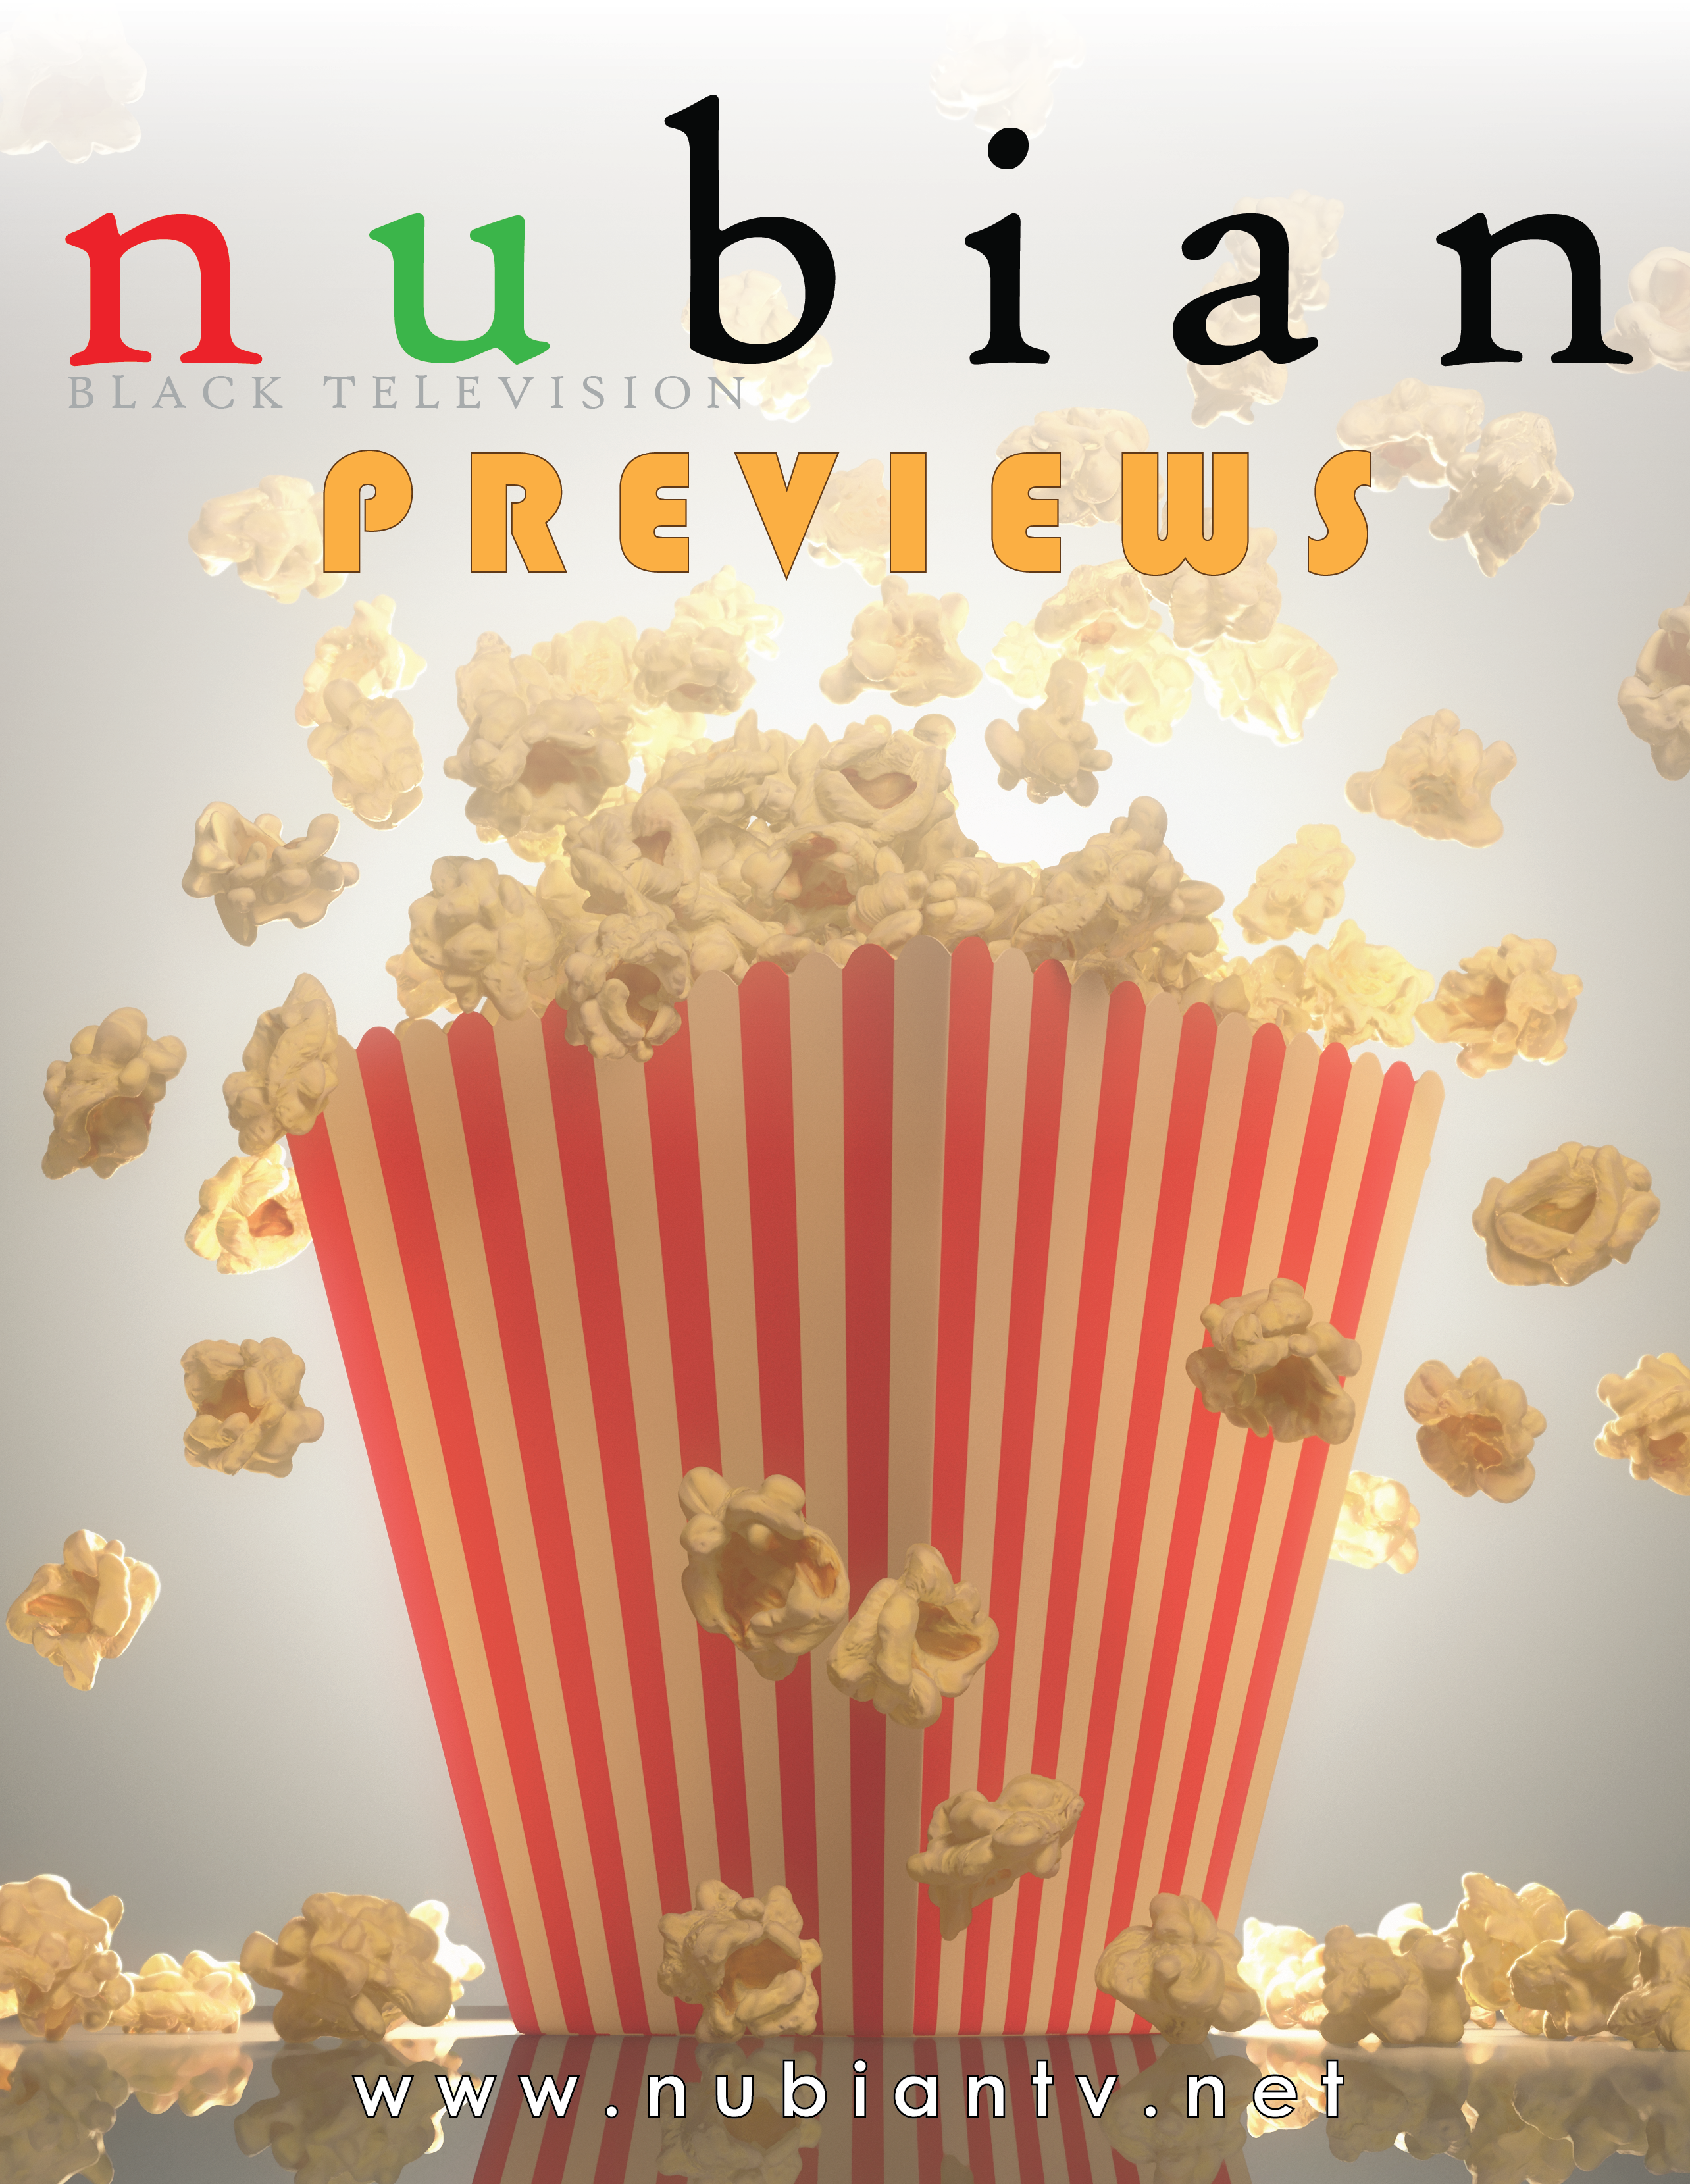 Nubian TV Previews